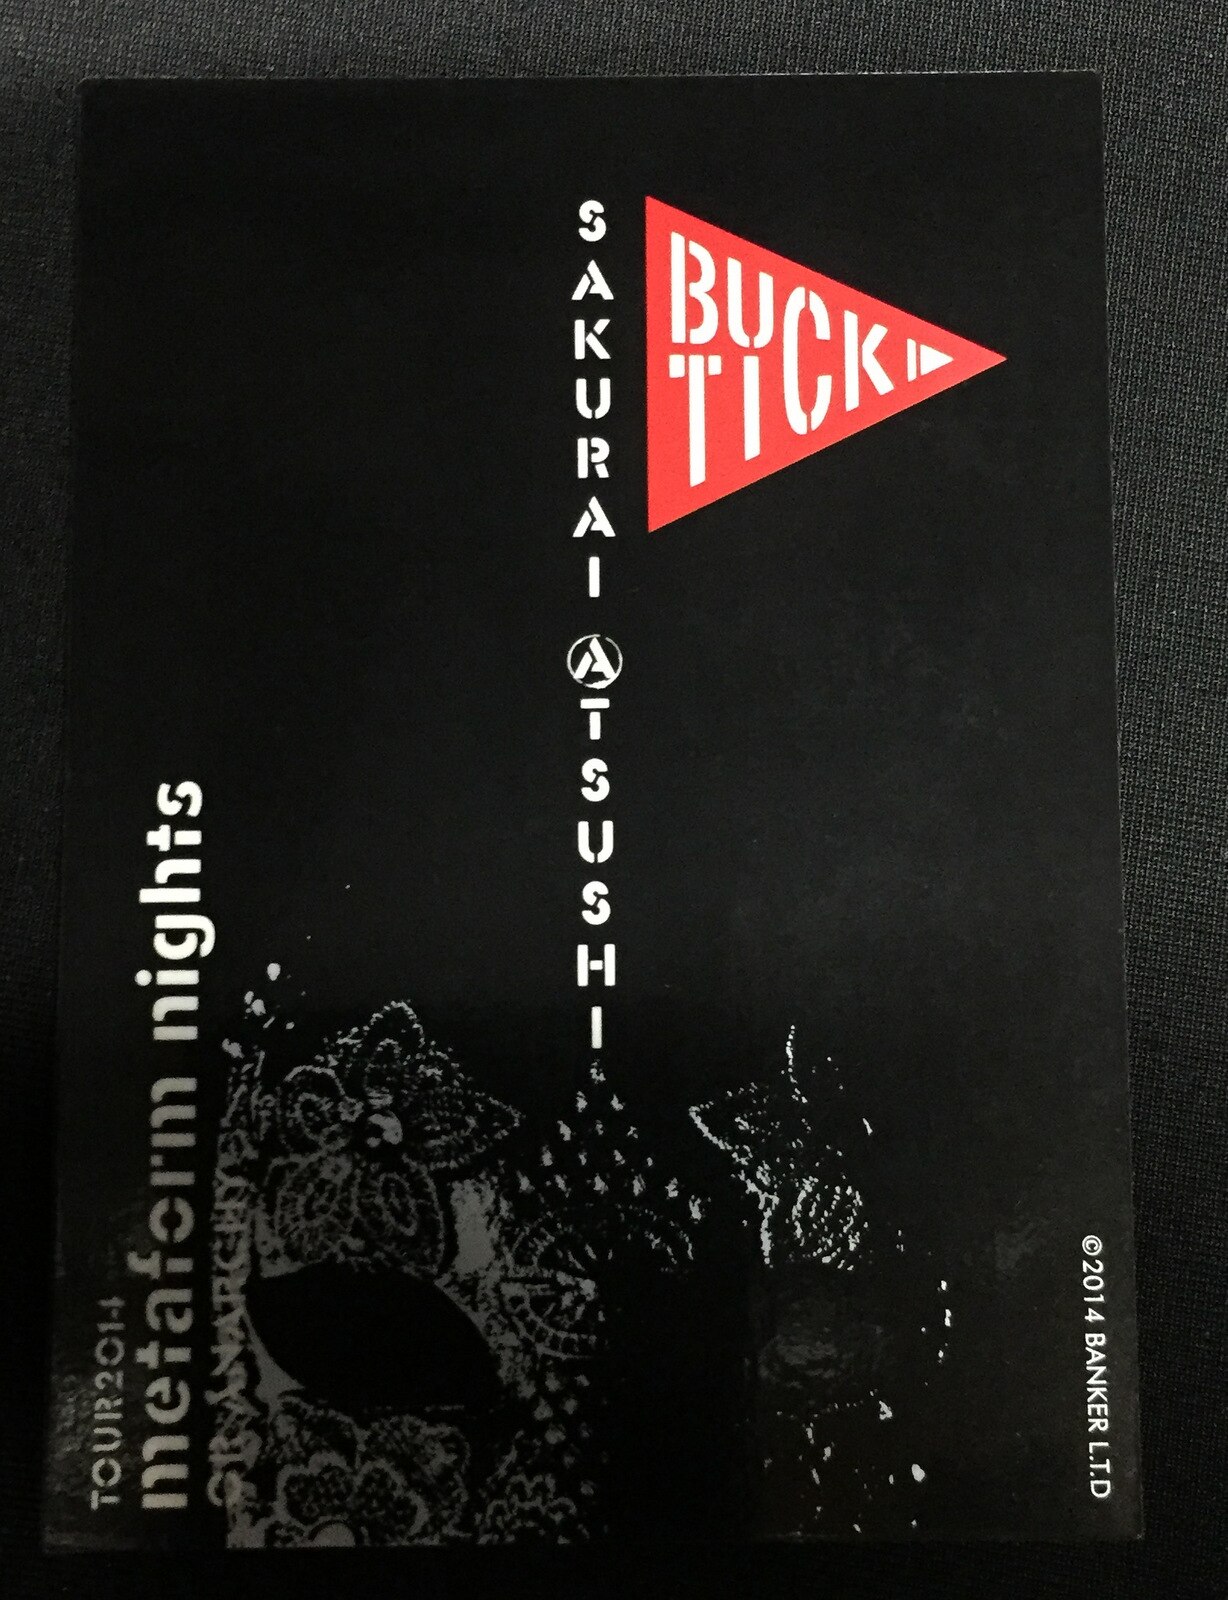 BUCK-TICK TOUR 2014 metaform nights ～或いはアナーキー～ 櫻井敦司 